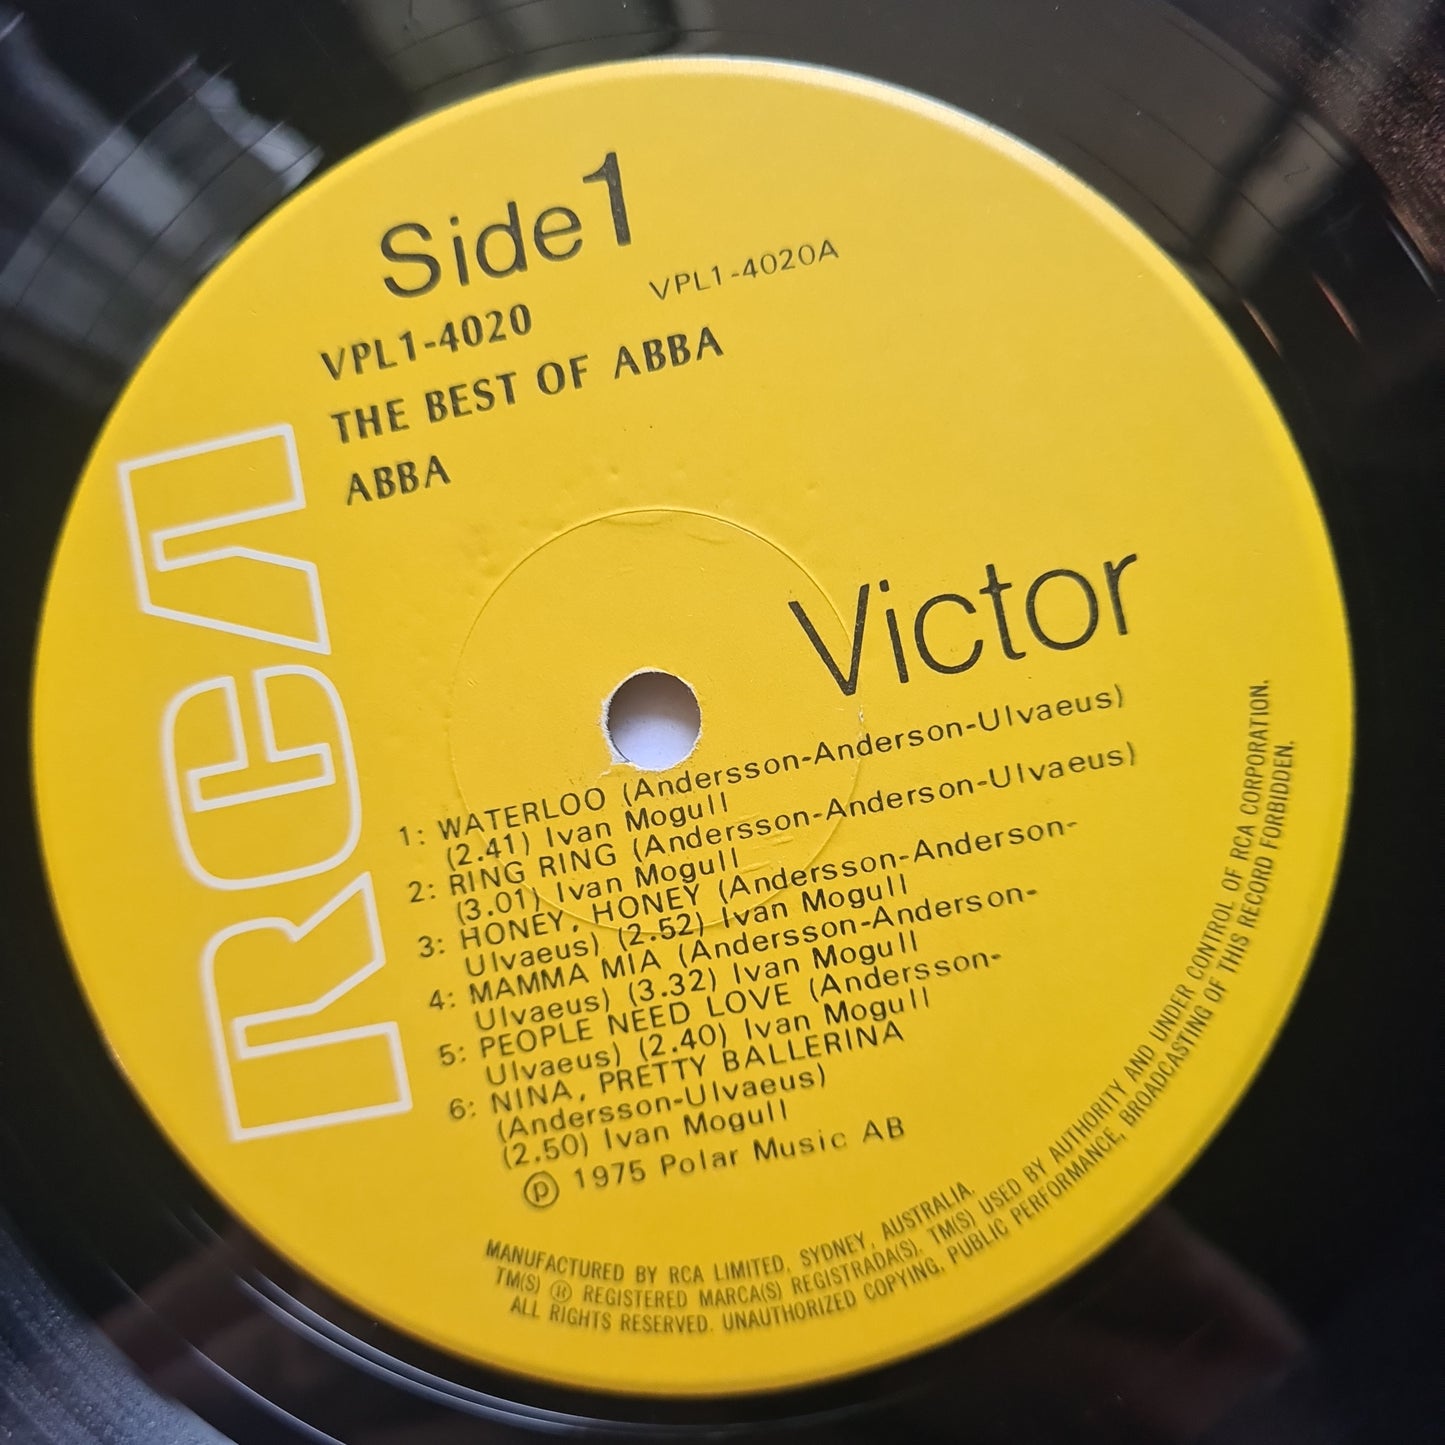 ABBA – The Best of Abba - 1975 - Vinyl Record